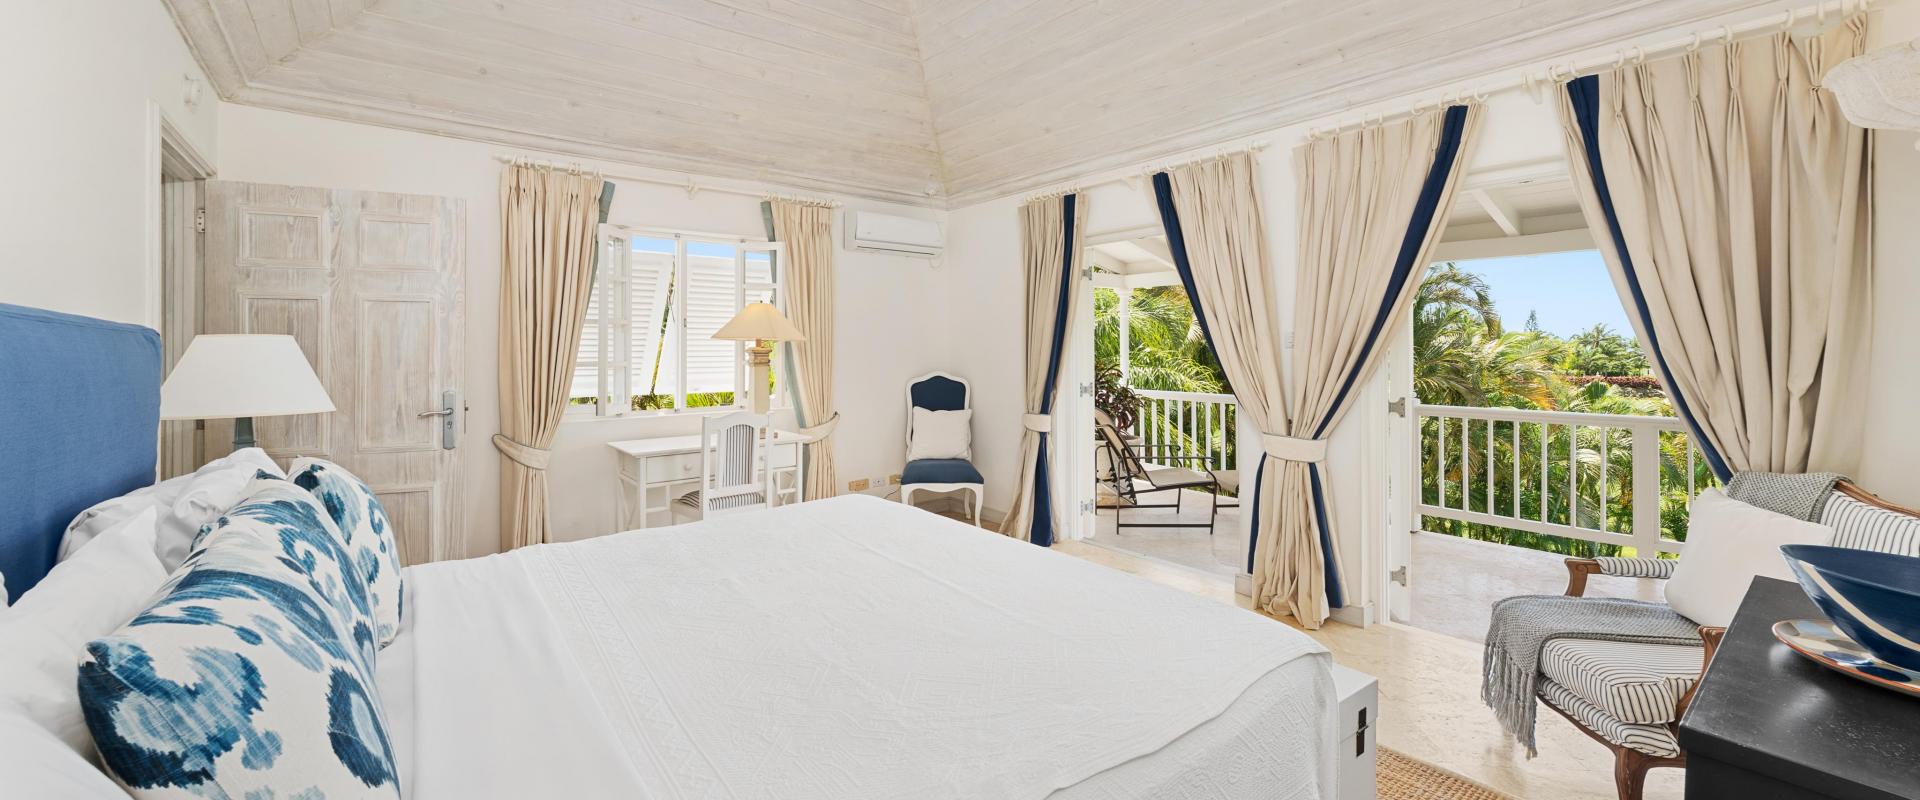 Villa Rosa Holiday Rental Villa In Royal Westmoreland Barbados Master Bedroom with Views Out To Patio